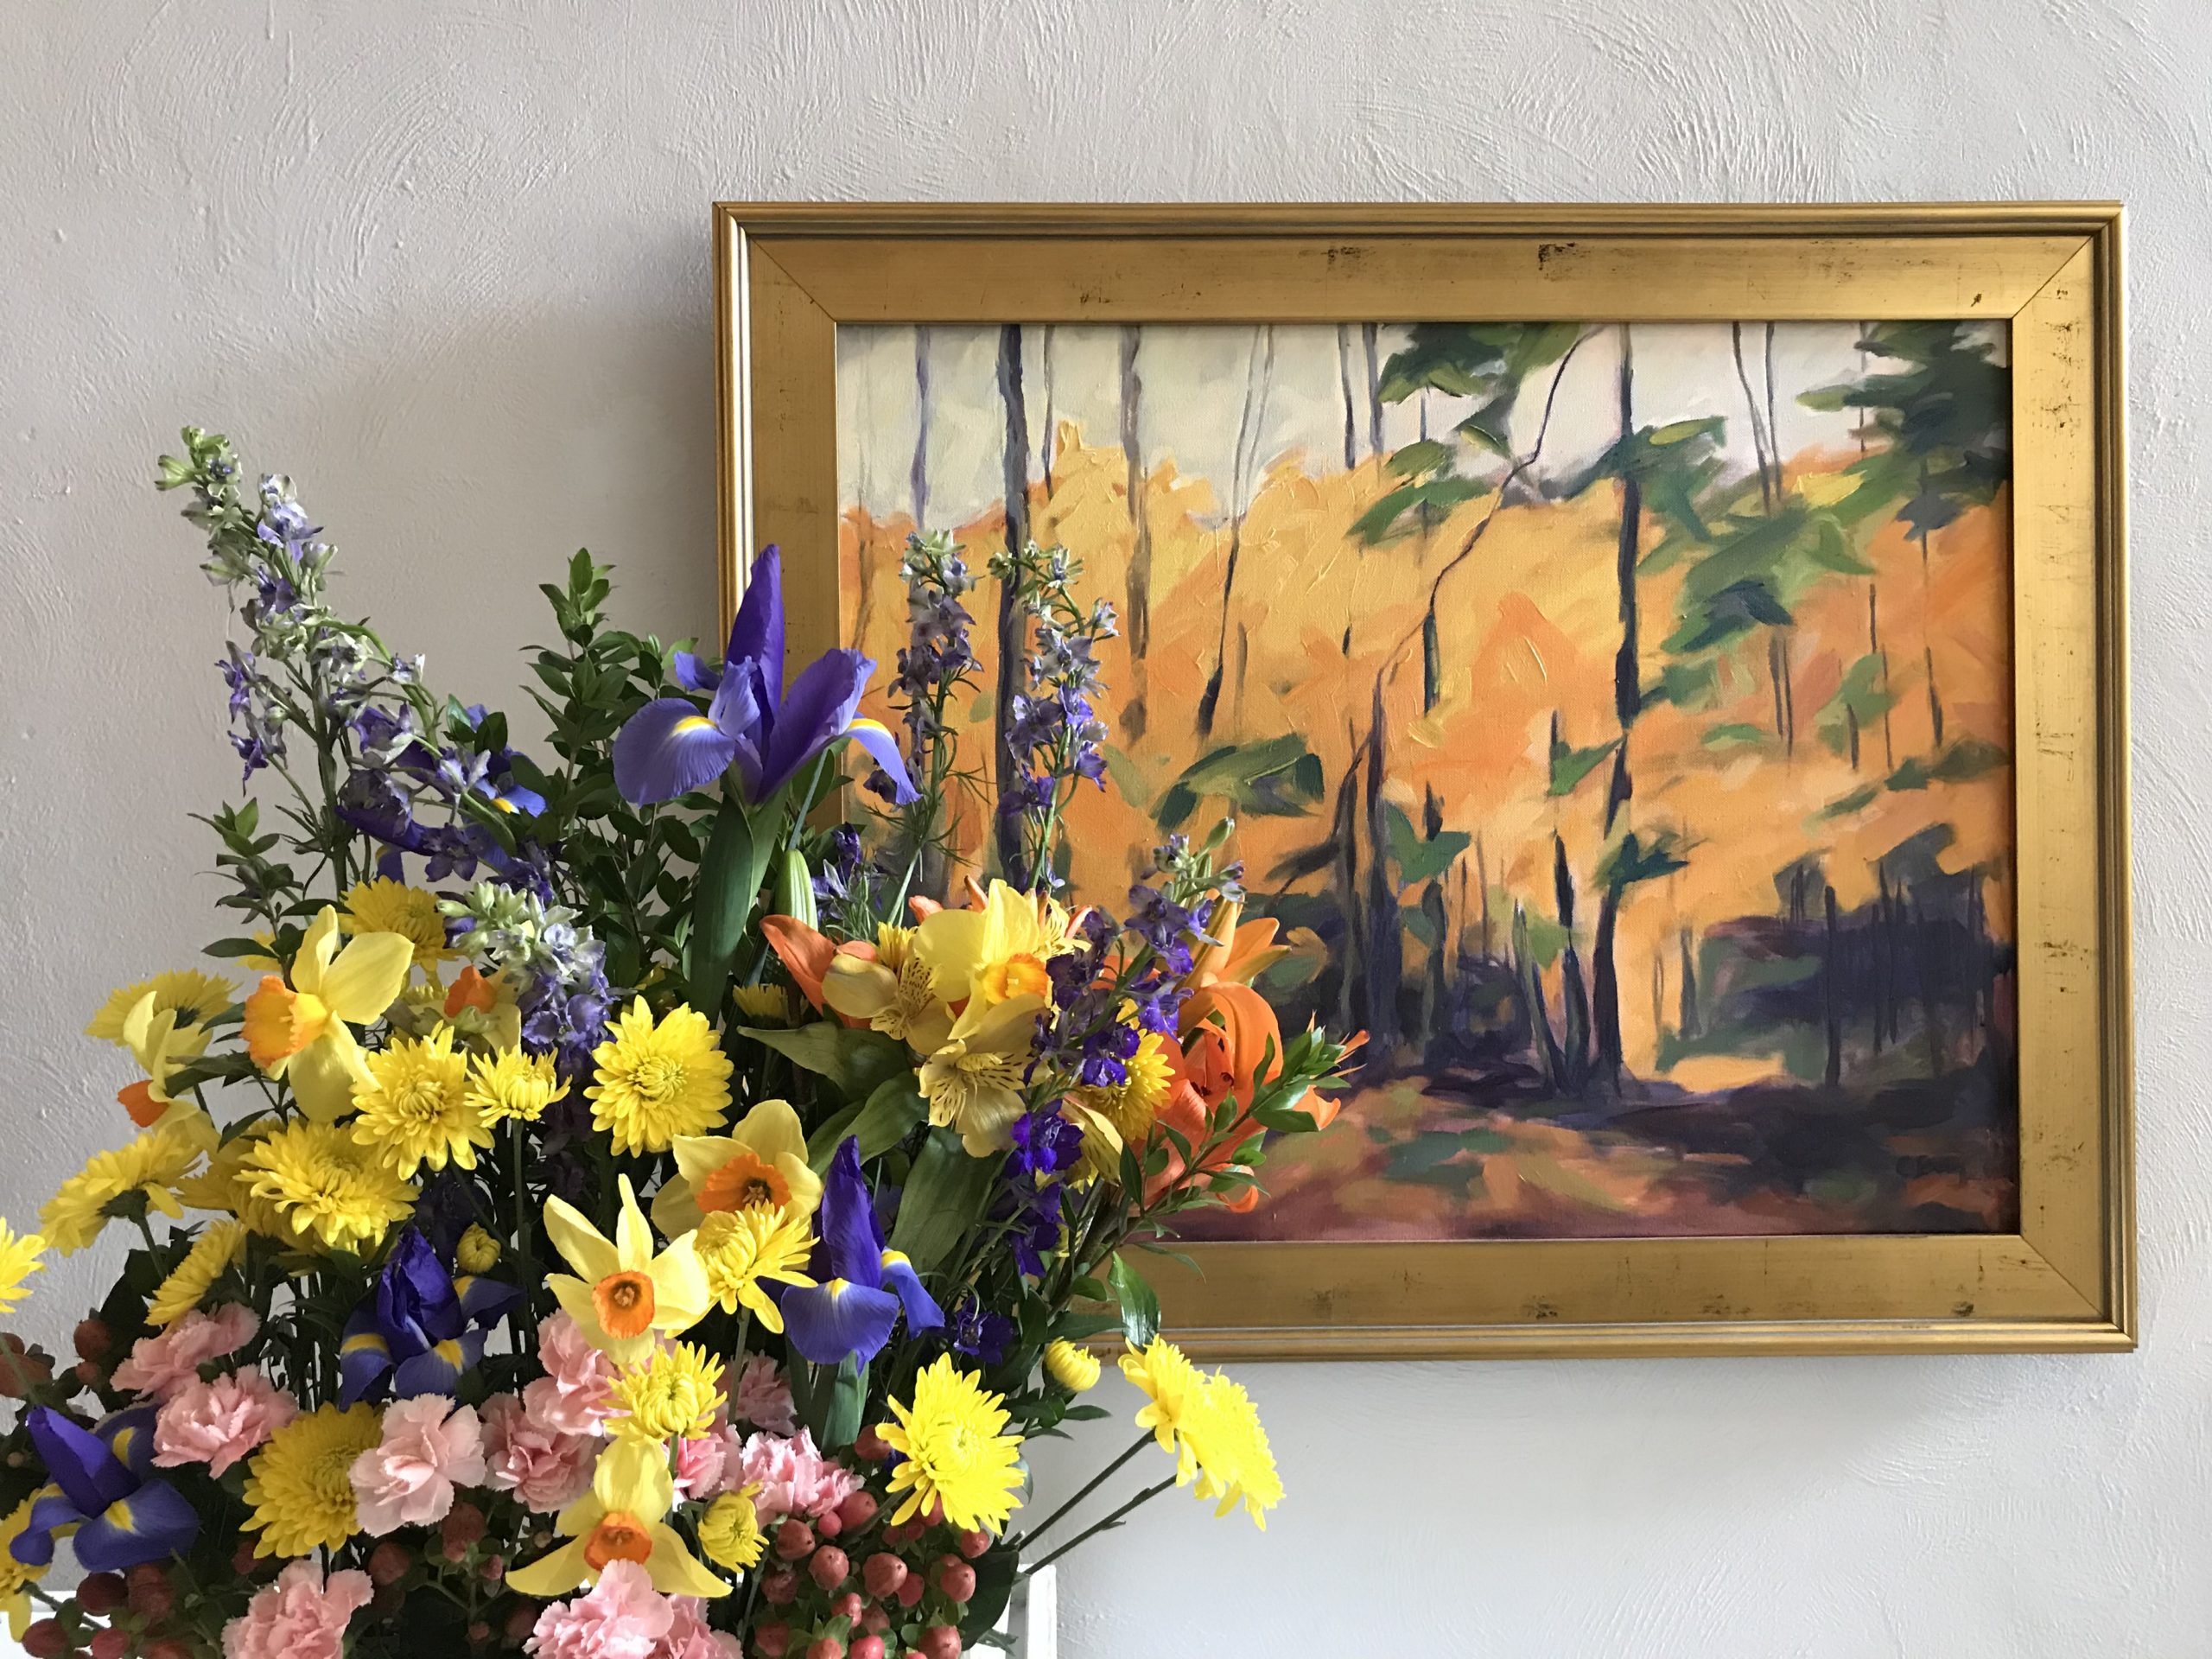 Flower arrangement next to painting